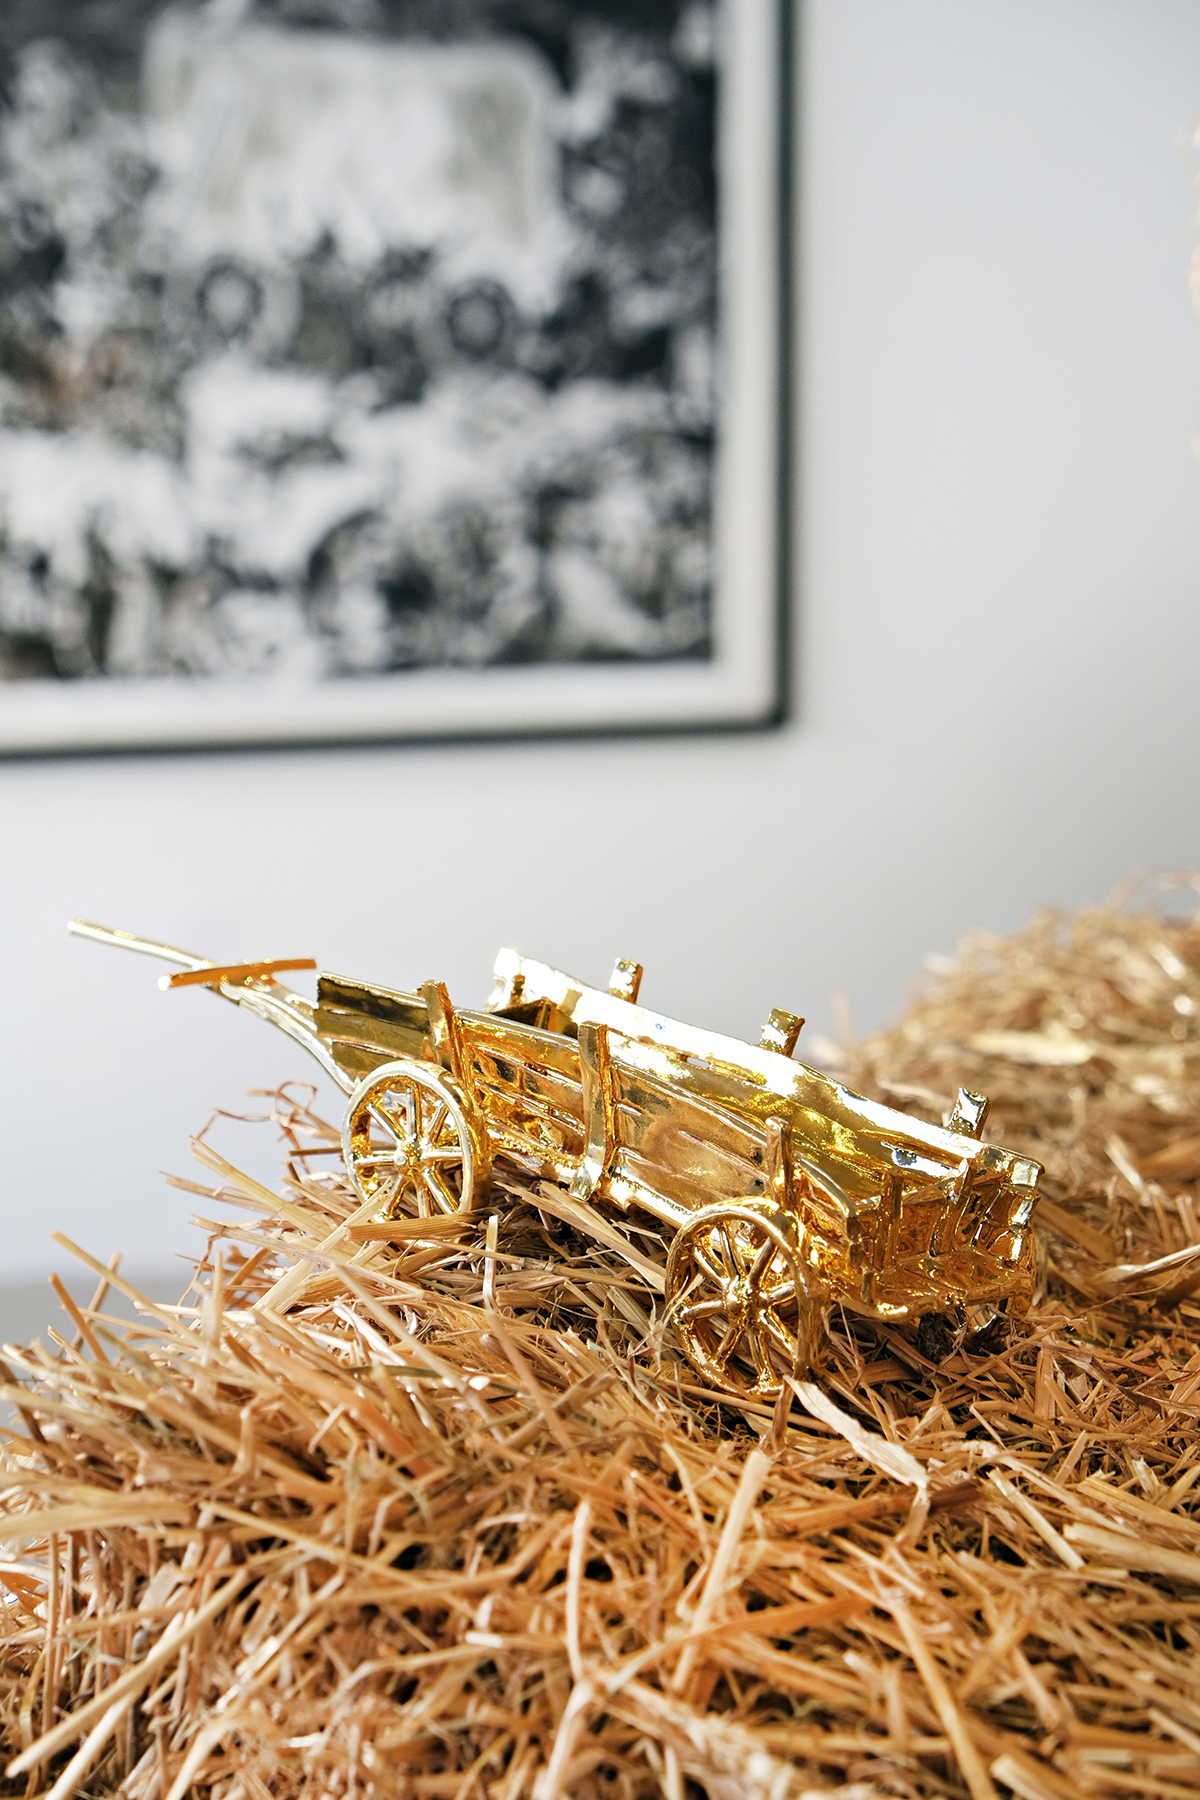 Conrad Hübbe, "Hay Wagon", 2020, clay and gold glaze, 6 x 7 x 30 cm